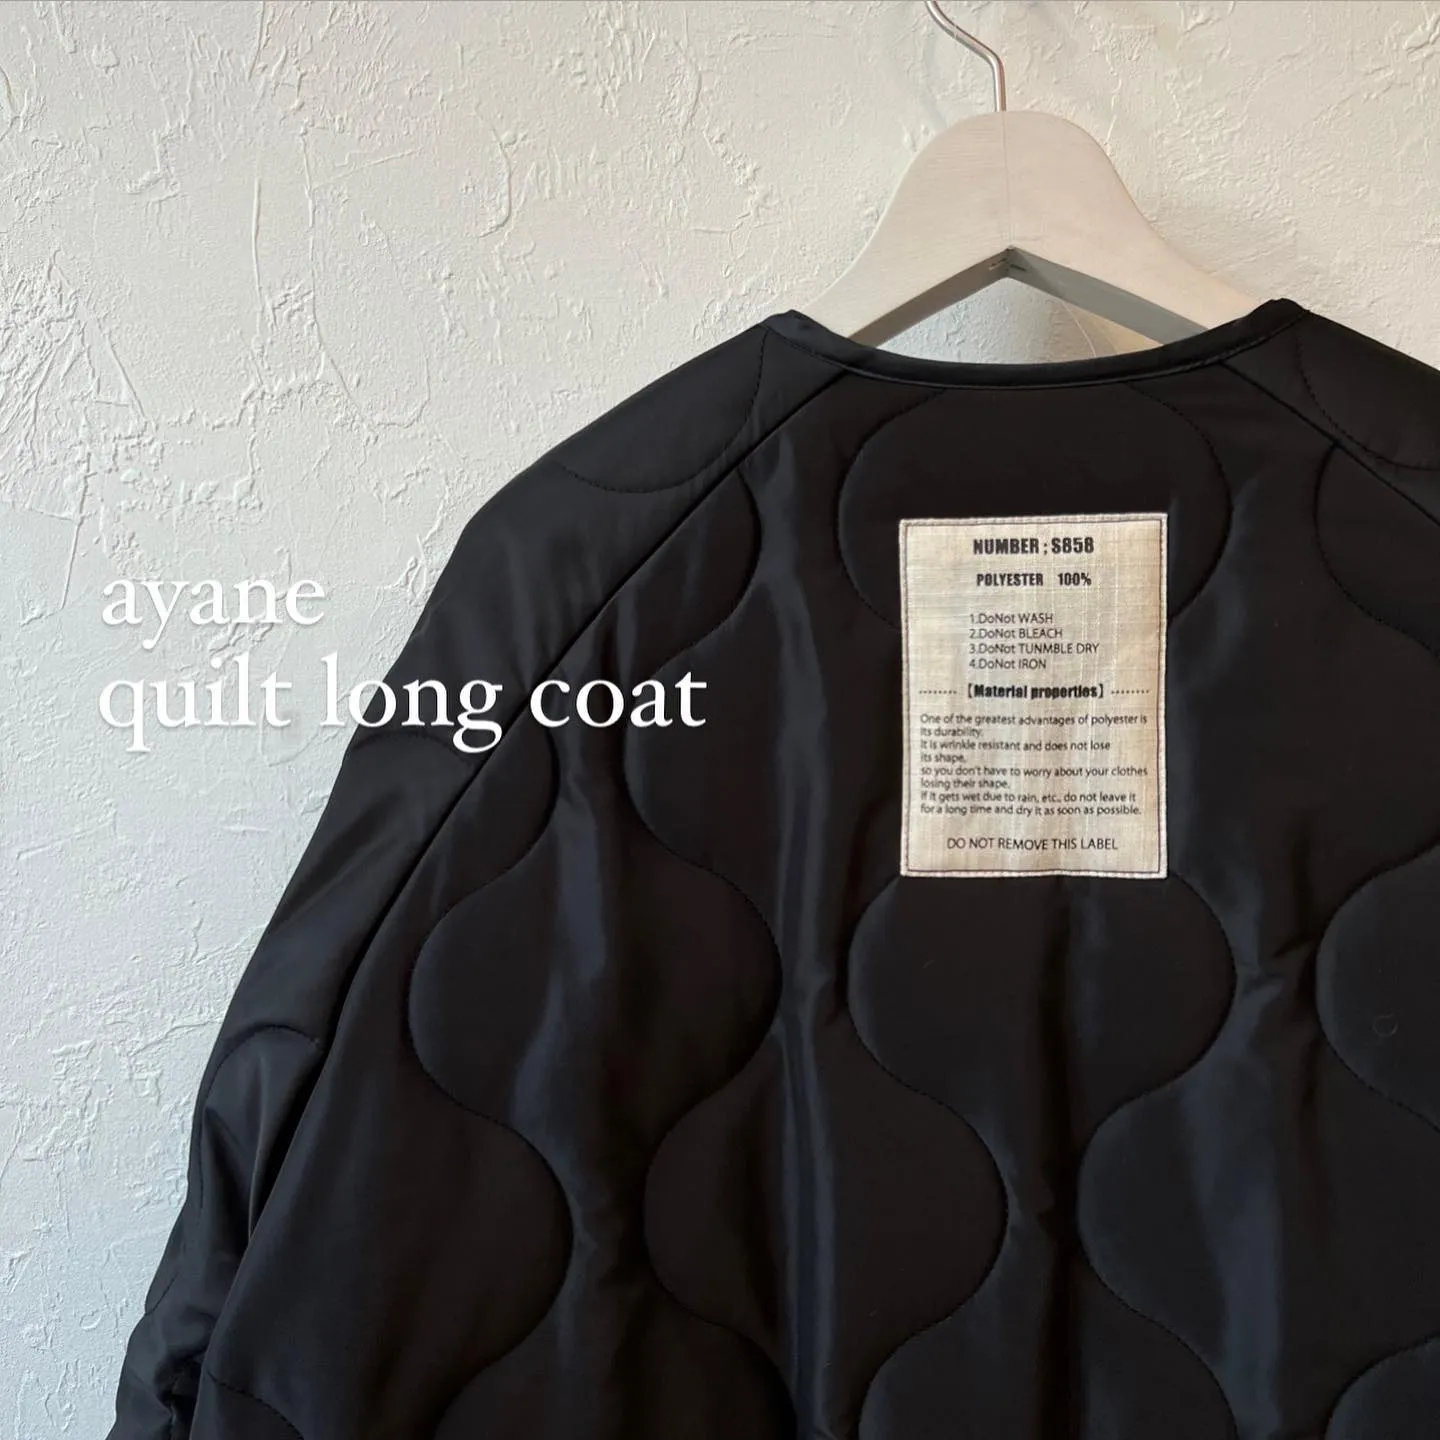 quilt long coat